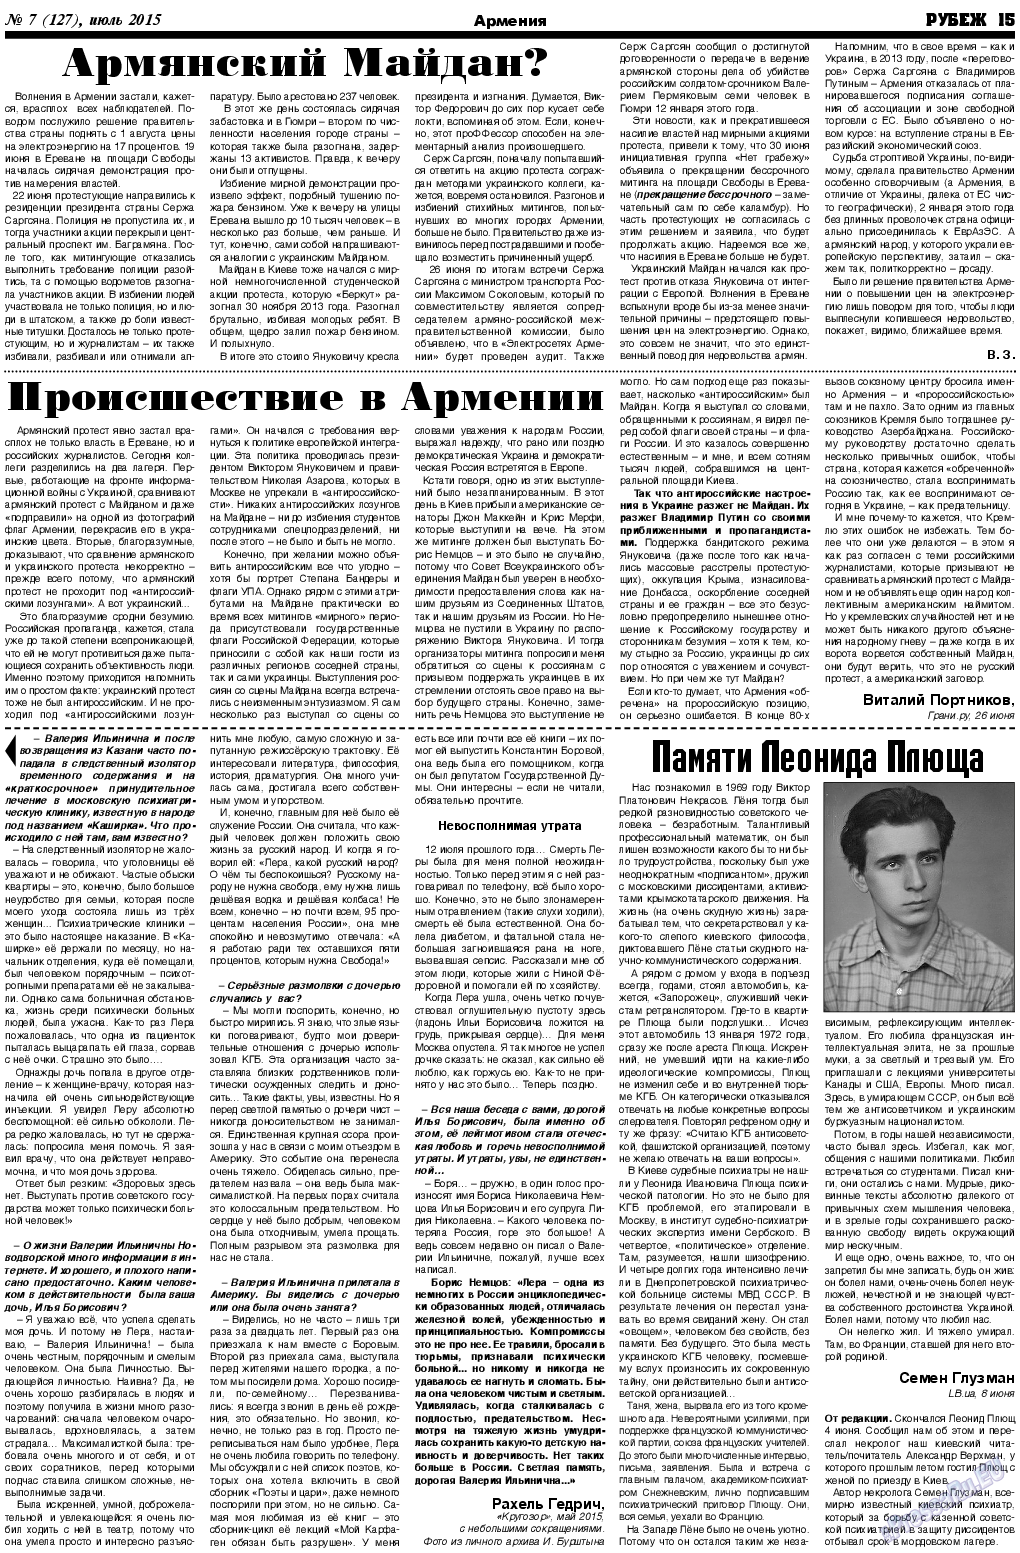 Рубеж, газета. 2015 №7 стр.15